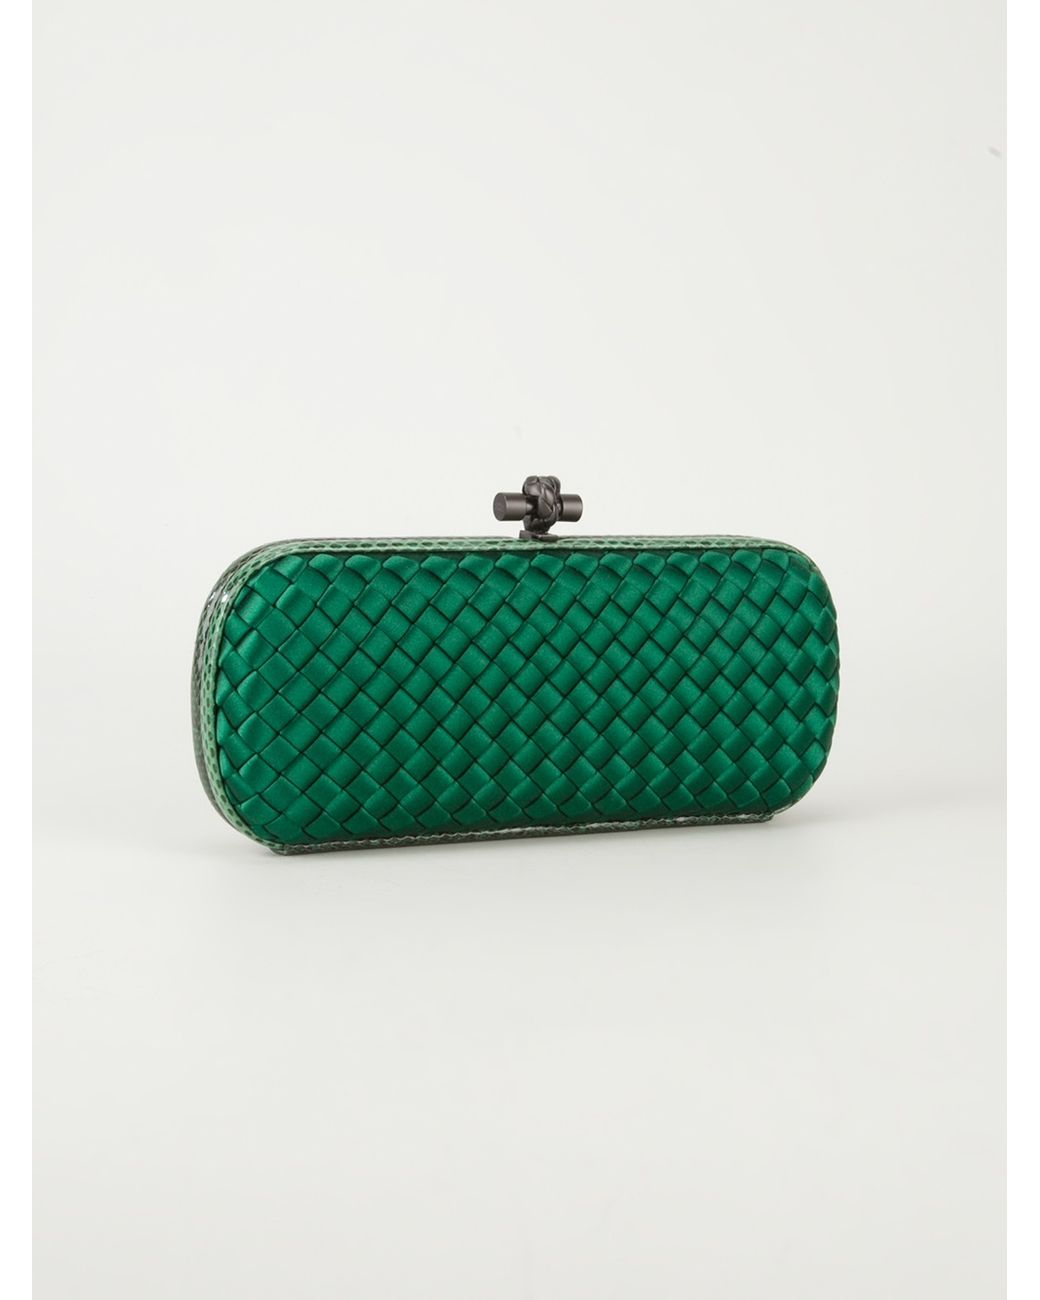 Bottega Veneta Knot Box Clutch Bag in Green | Lyst